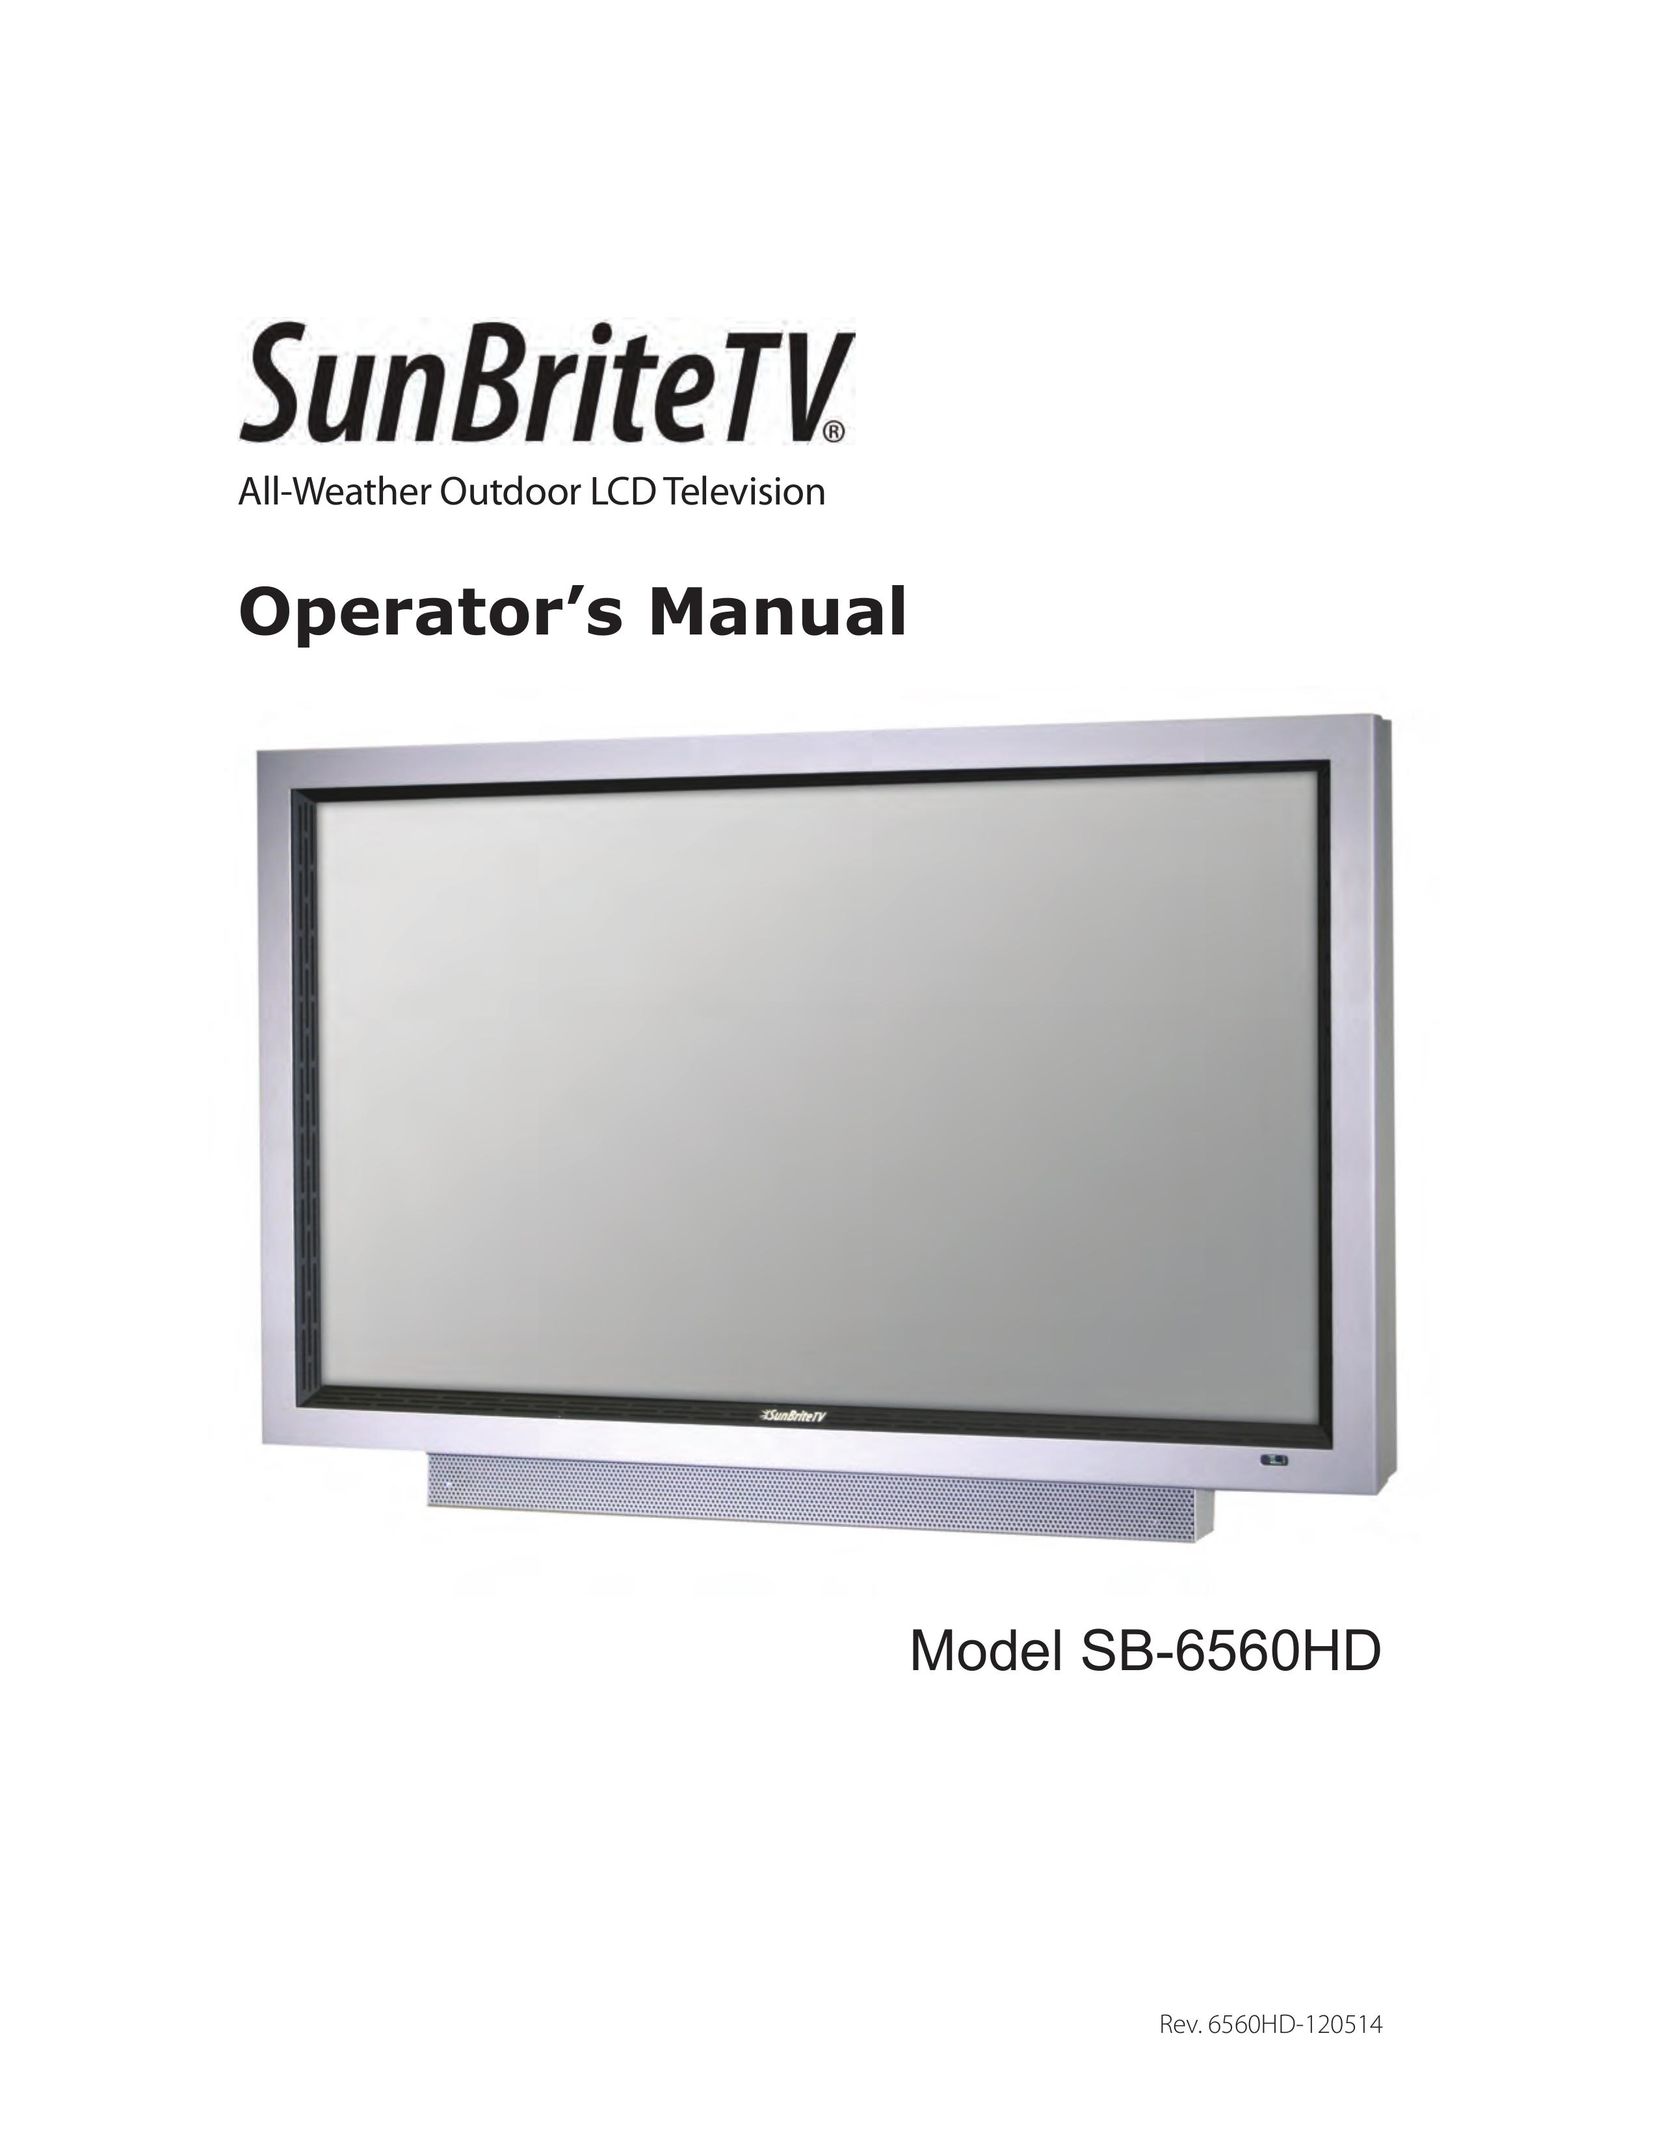 SunBriteTV SB-6560HD Flat Panel Television User Manual